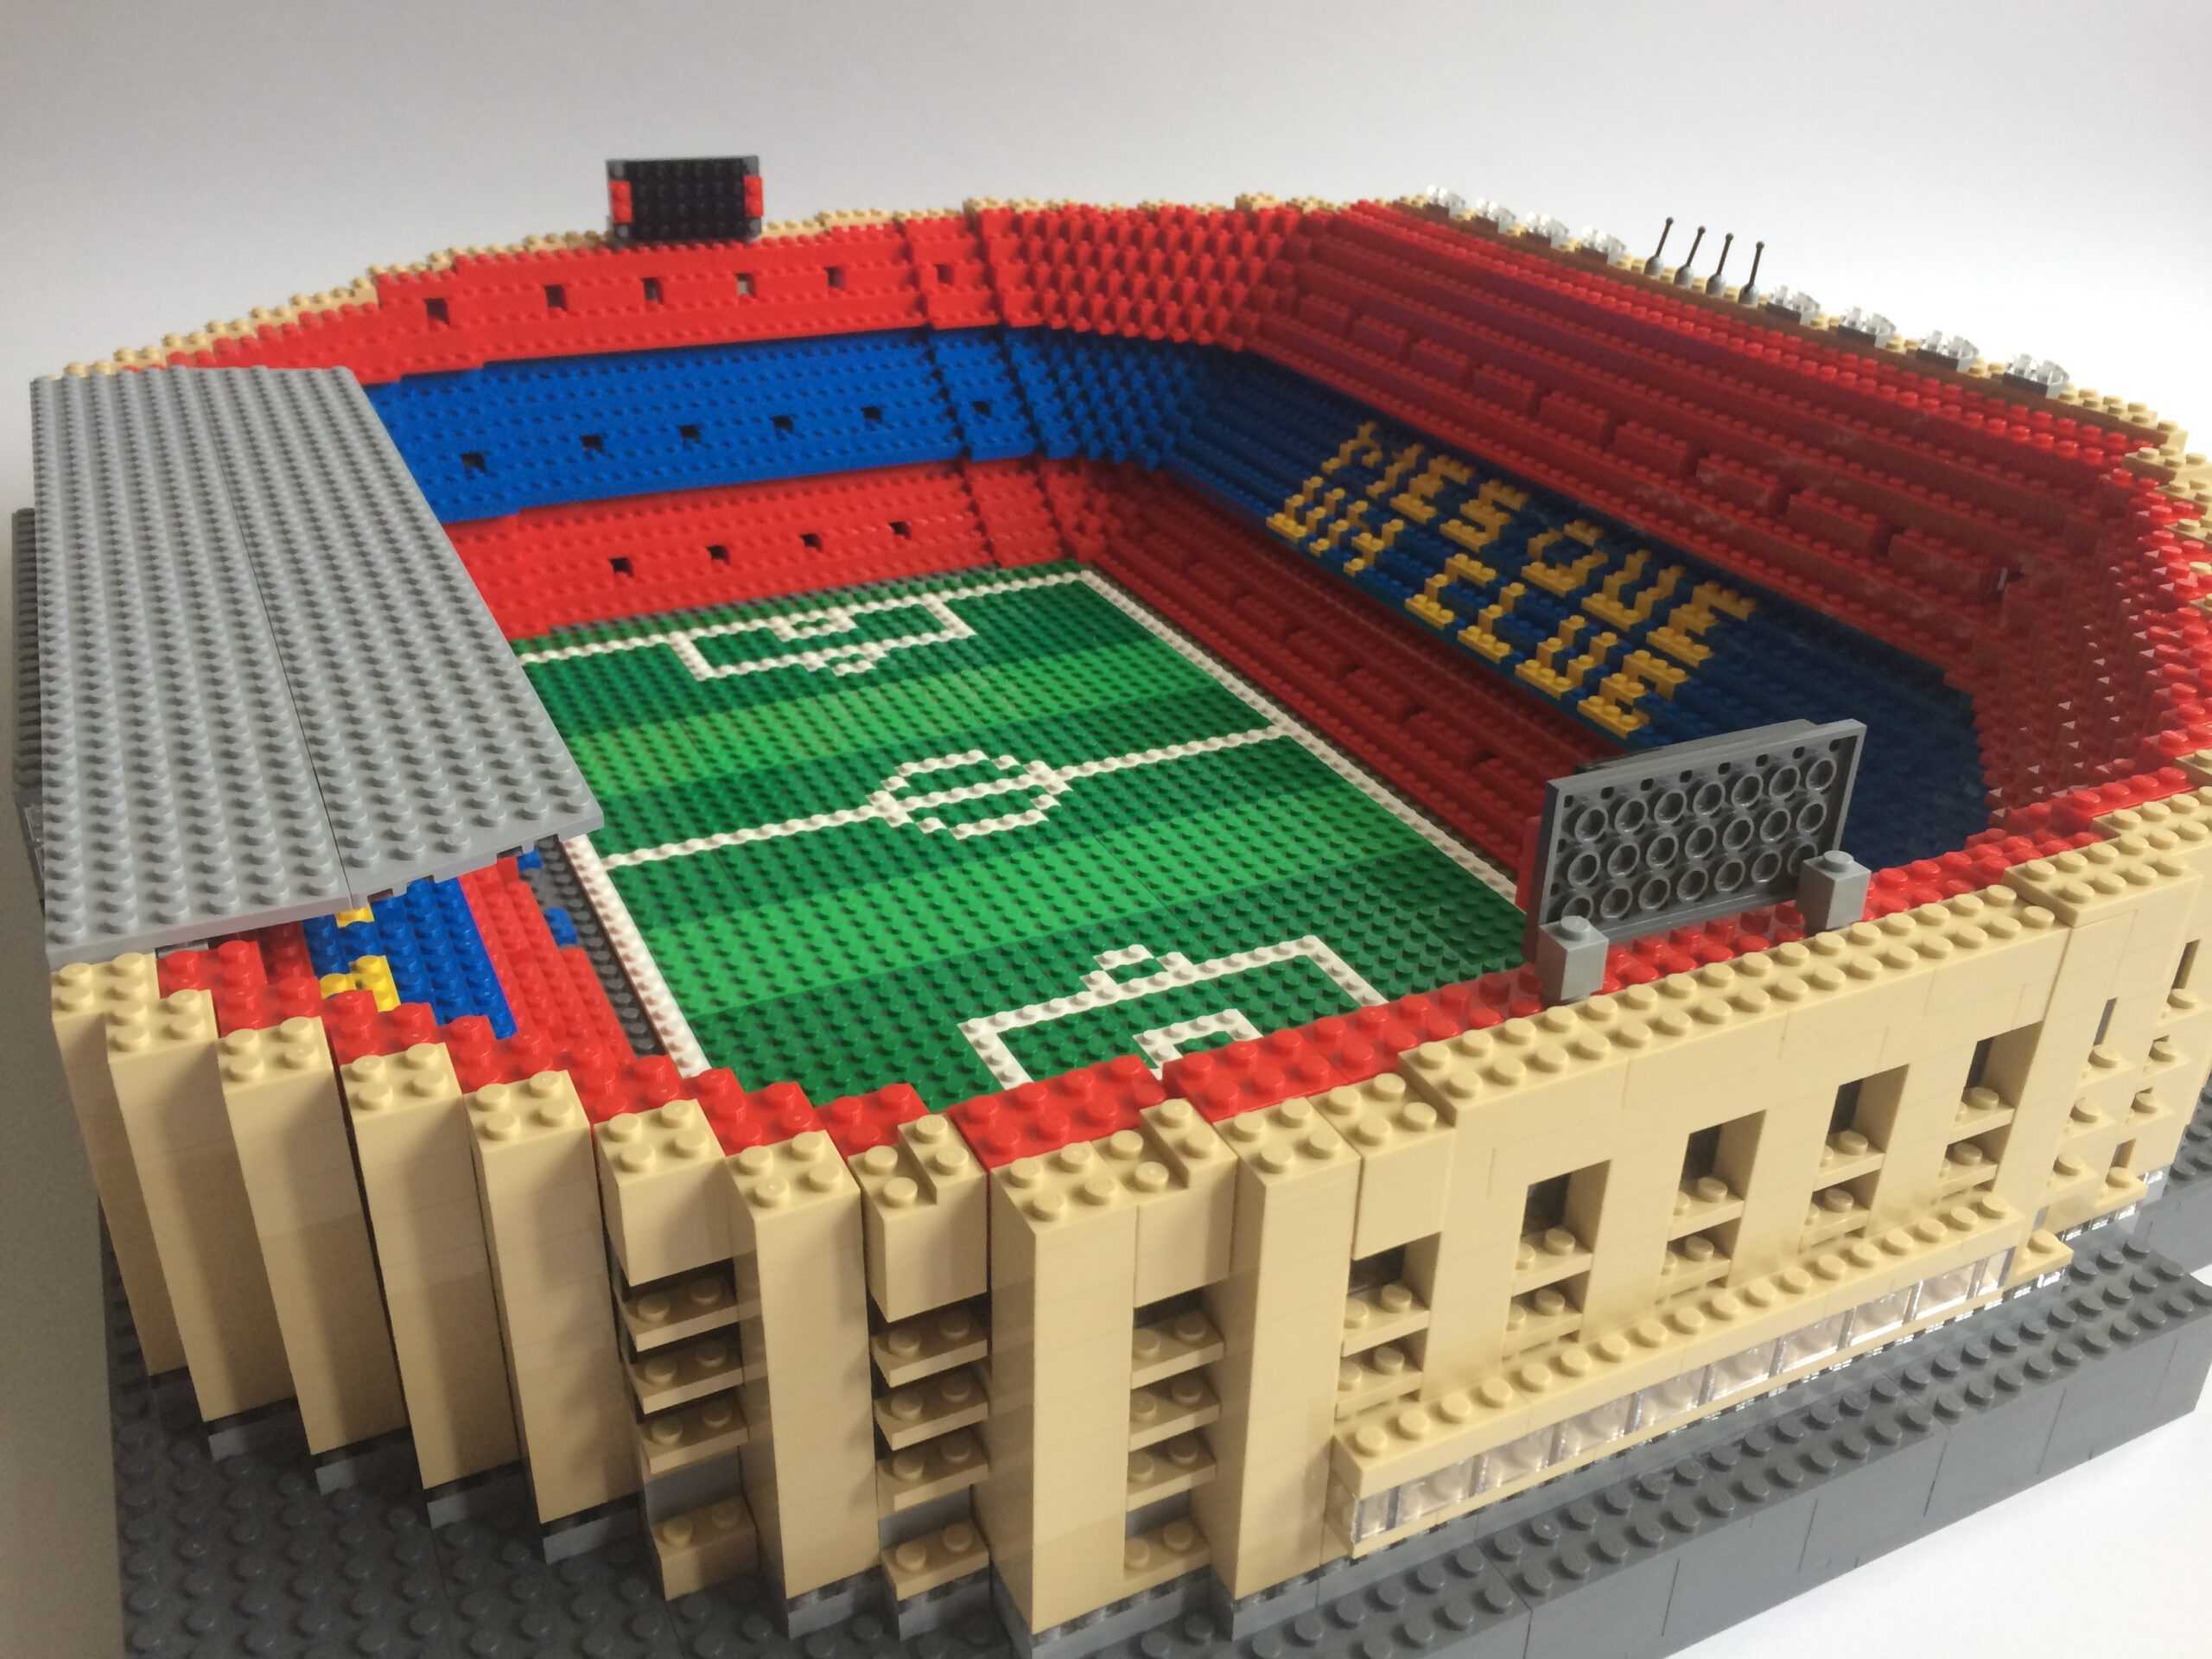 Lego представила набор в виде стадиона «Камп Ноу» футбольного клуба «Барселона»